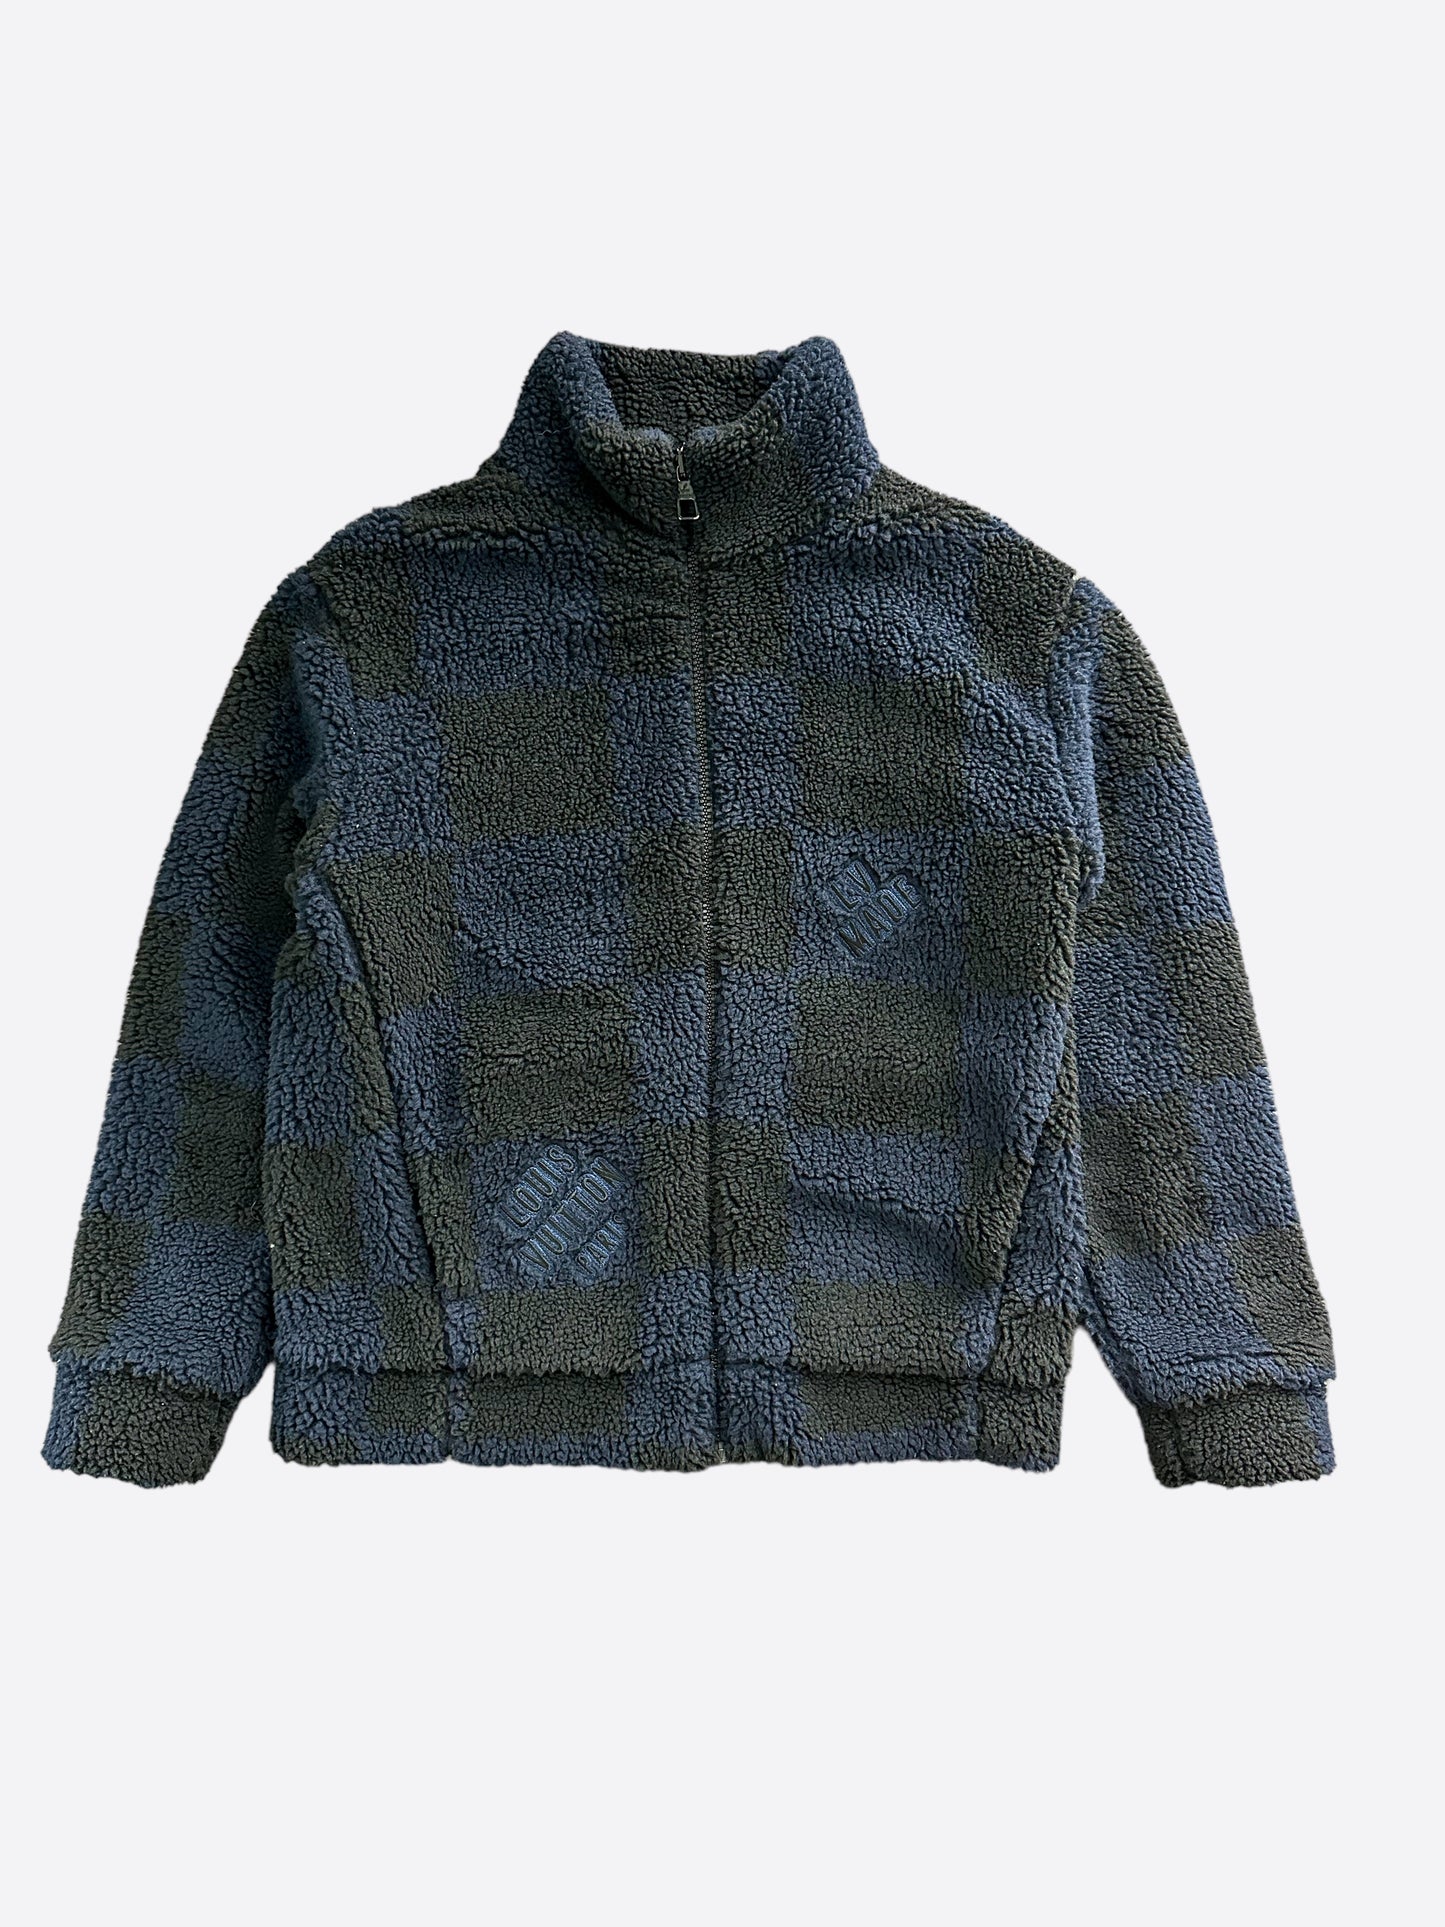 Louis Vuitton Black Monogram Sherpa Fleece Jacket